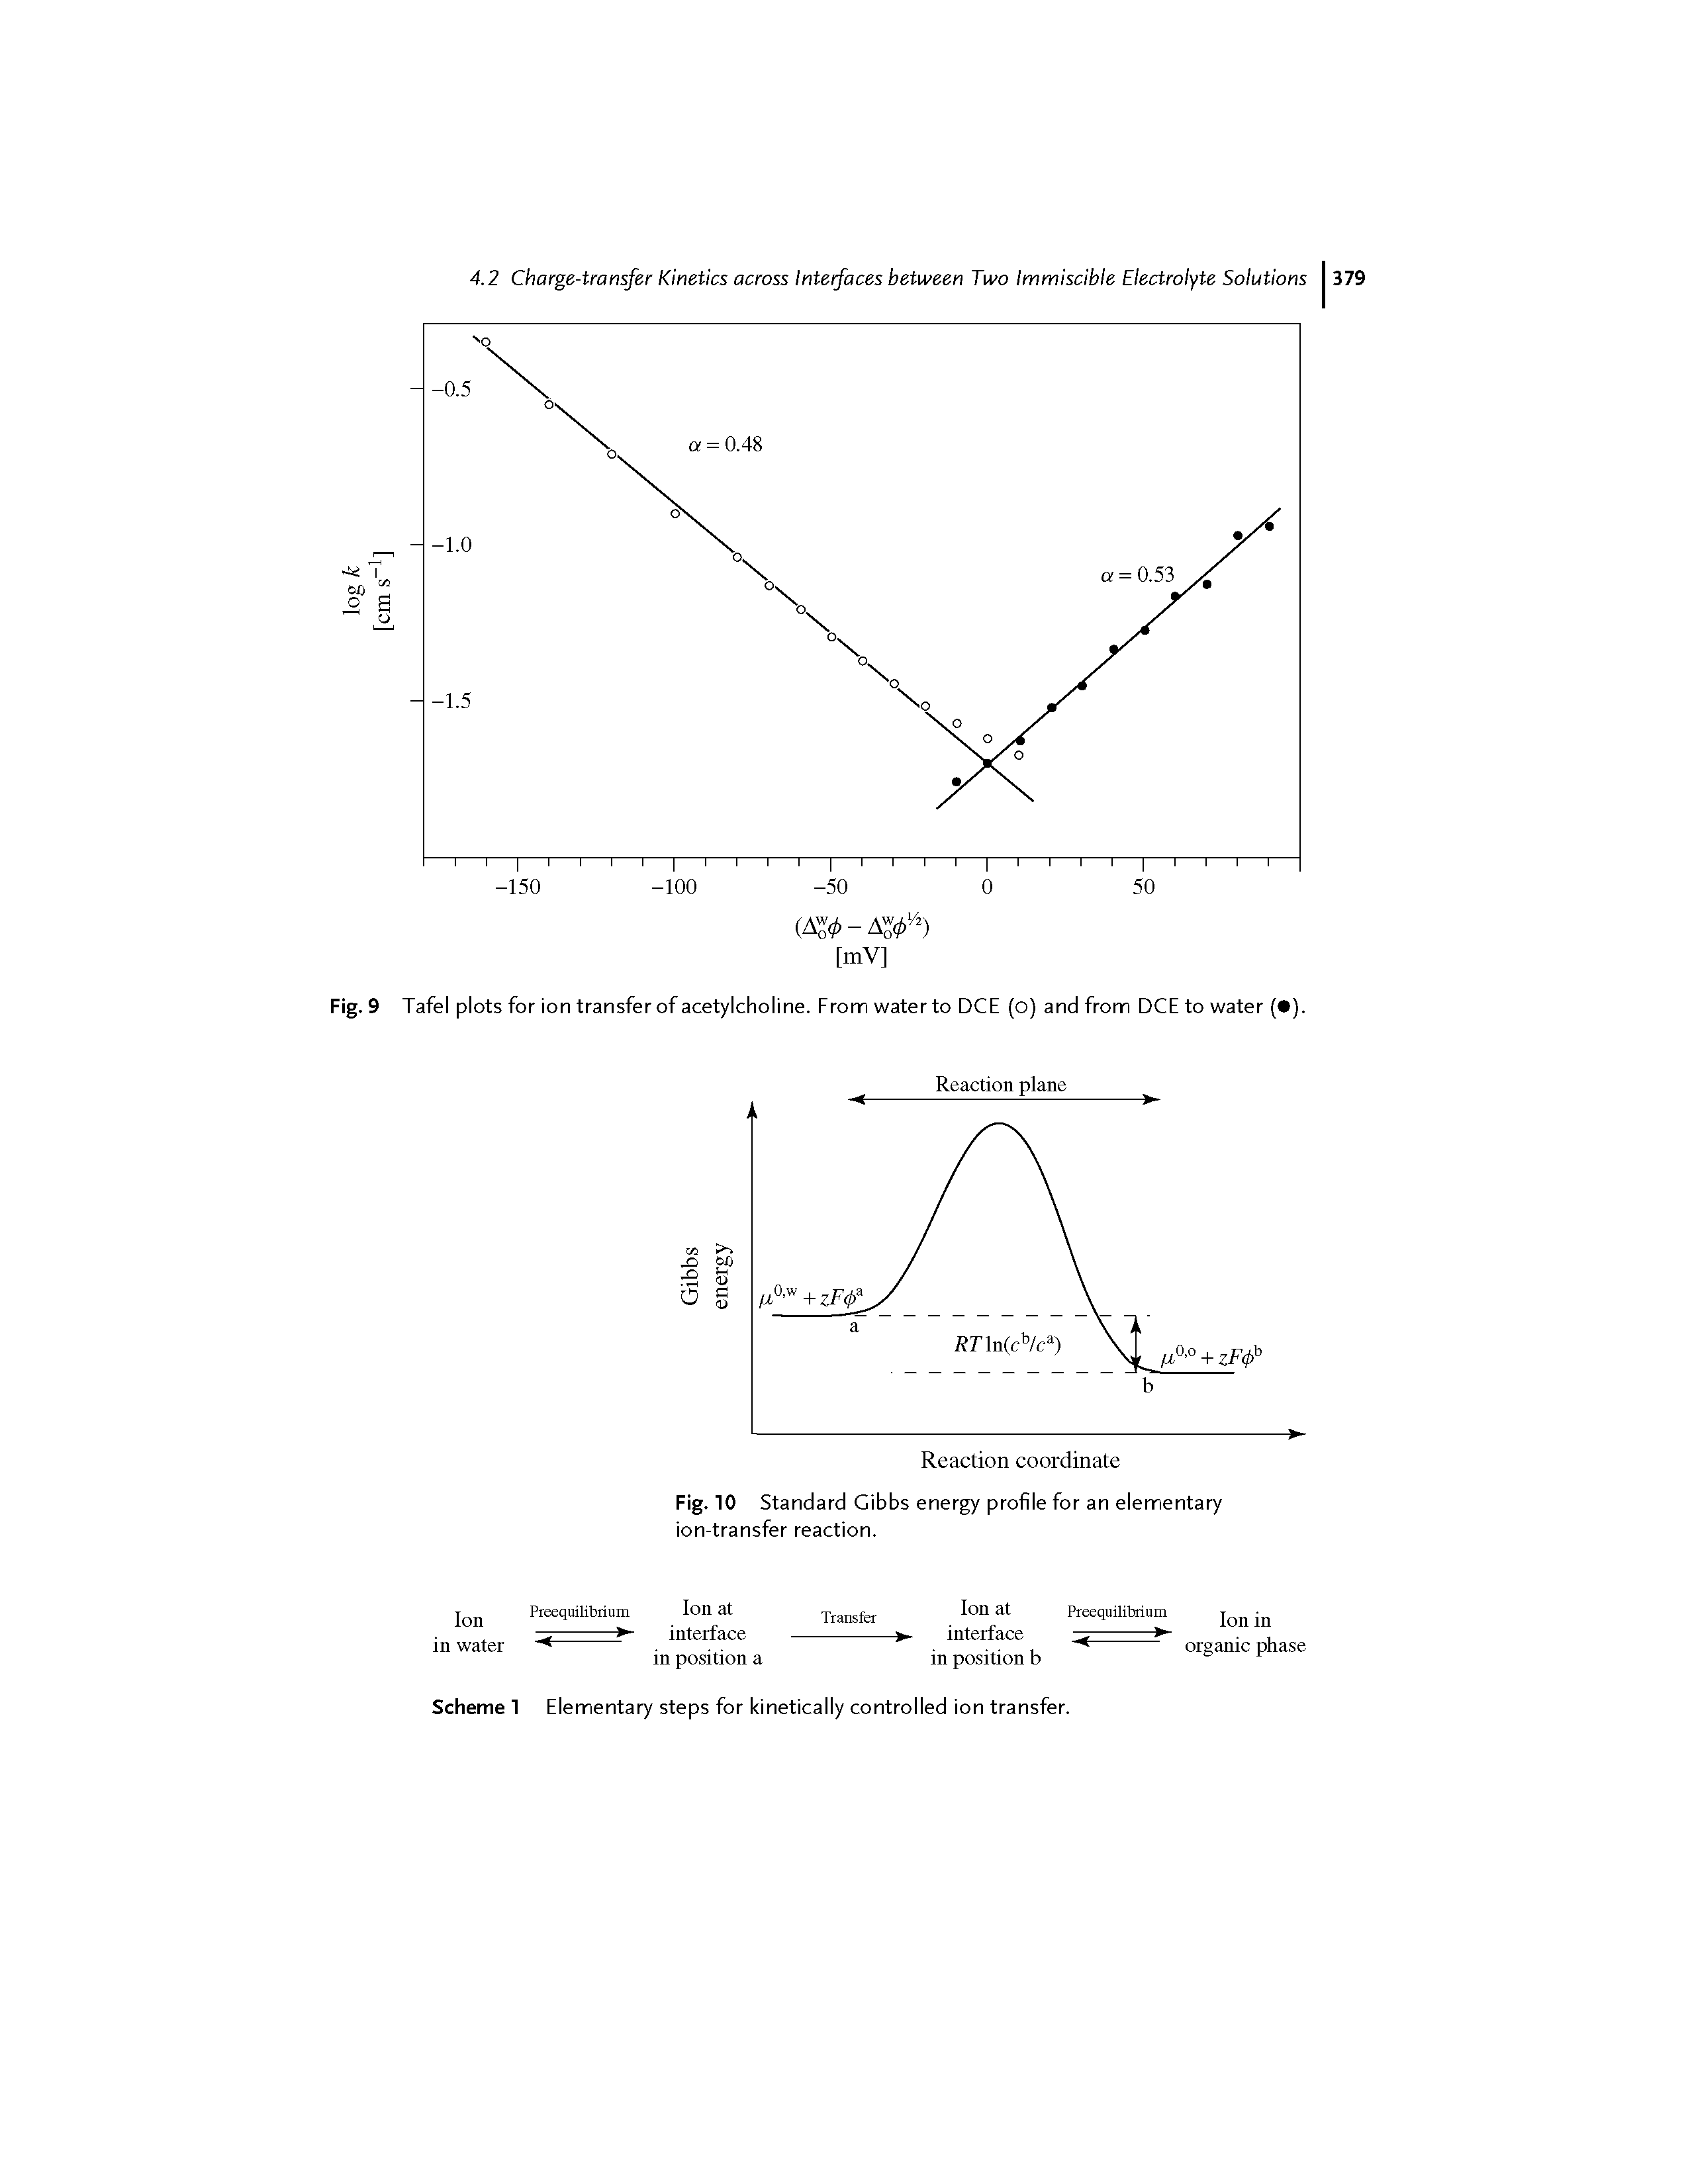 Fig. 10 Standard Gibbs energy profile for an elementary ion-transfer reaction.